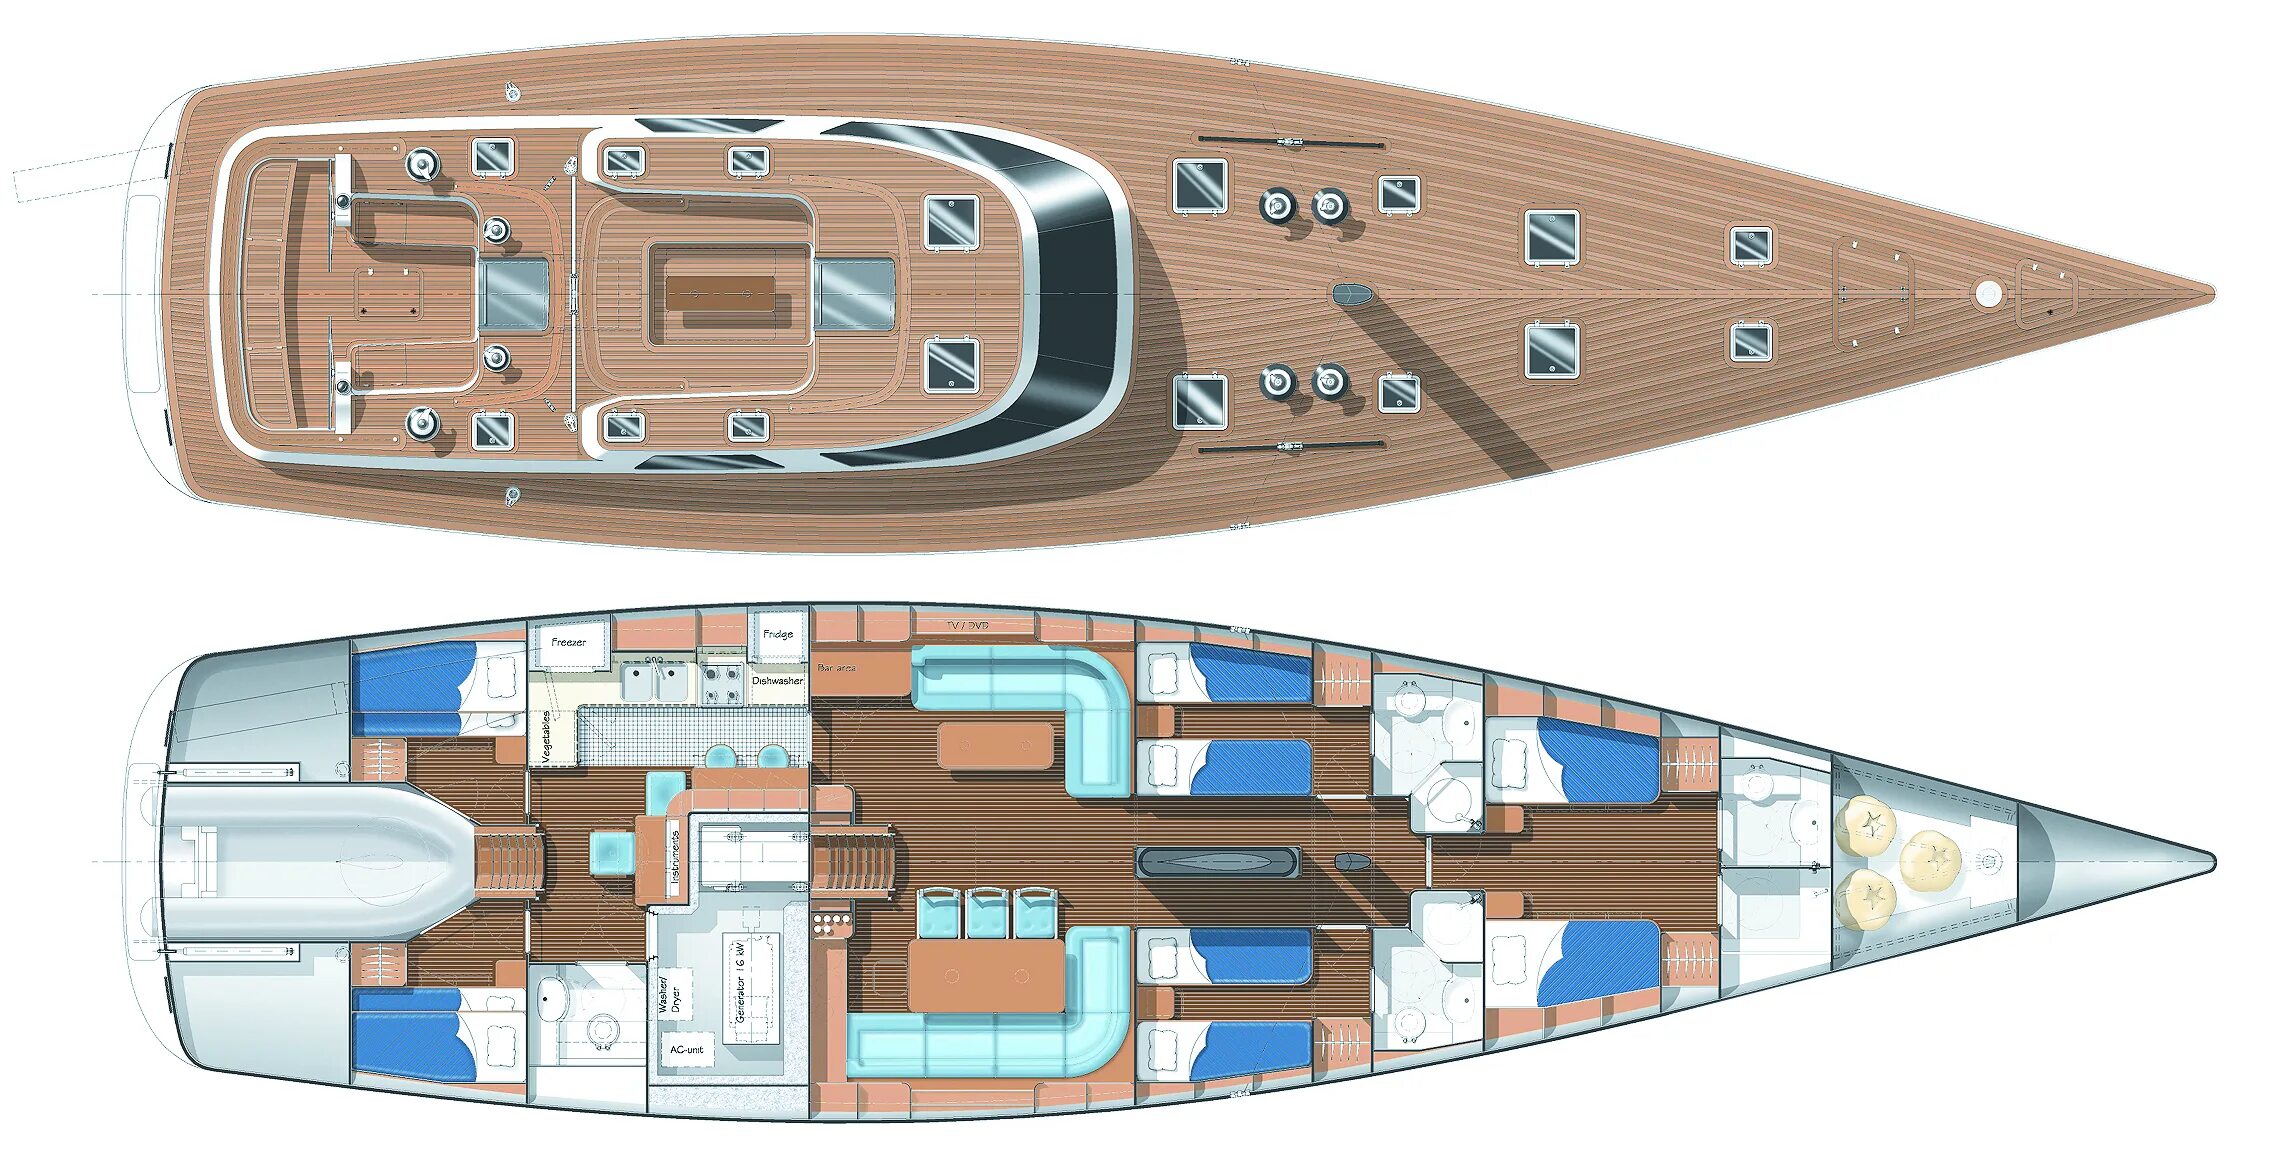 Full plans. Парусные яхты будущего. Яхты будущего планировка. Unasola яхта план палуб. Парусная яхта внутри.